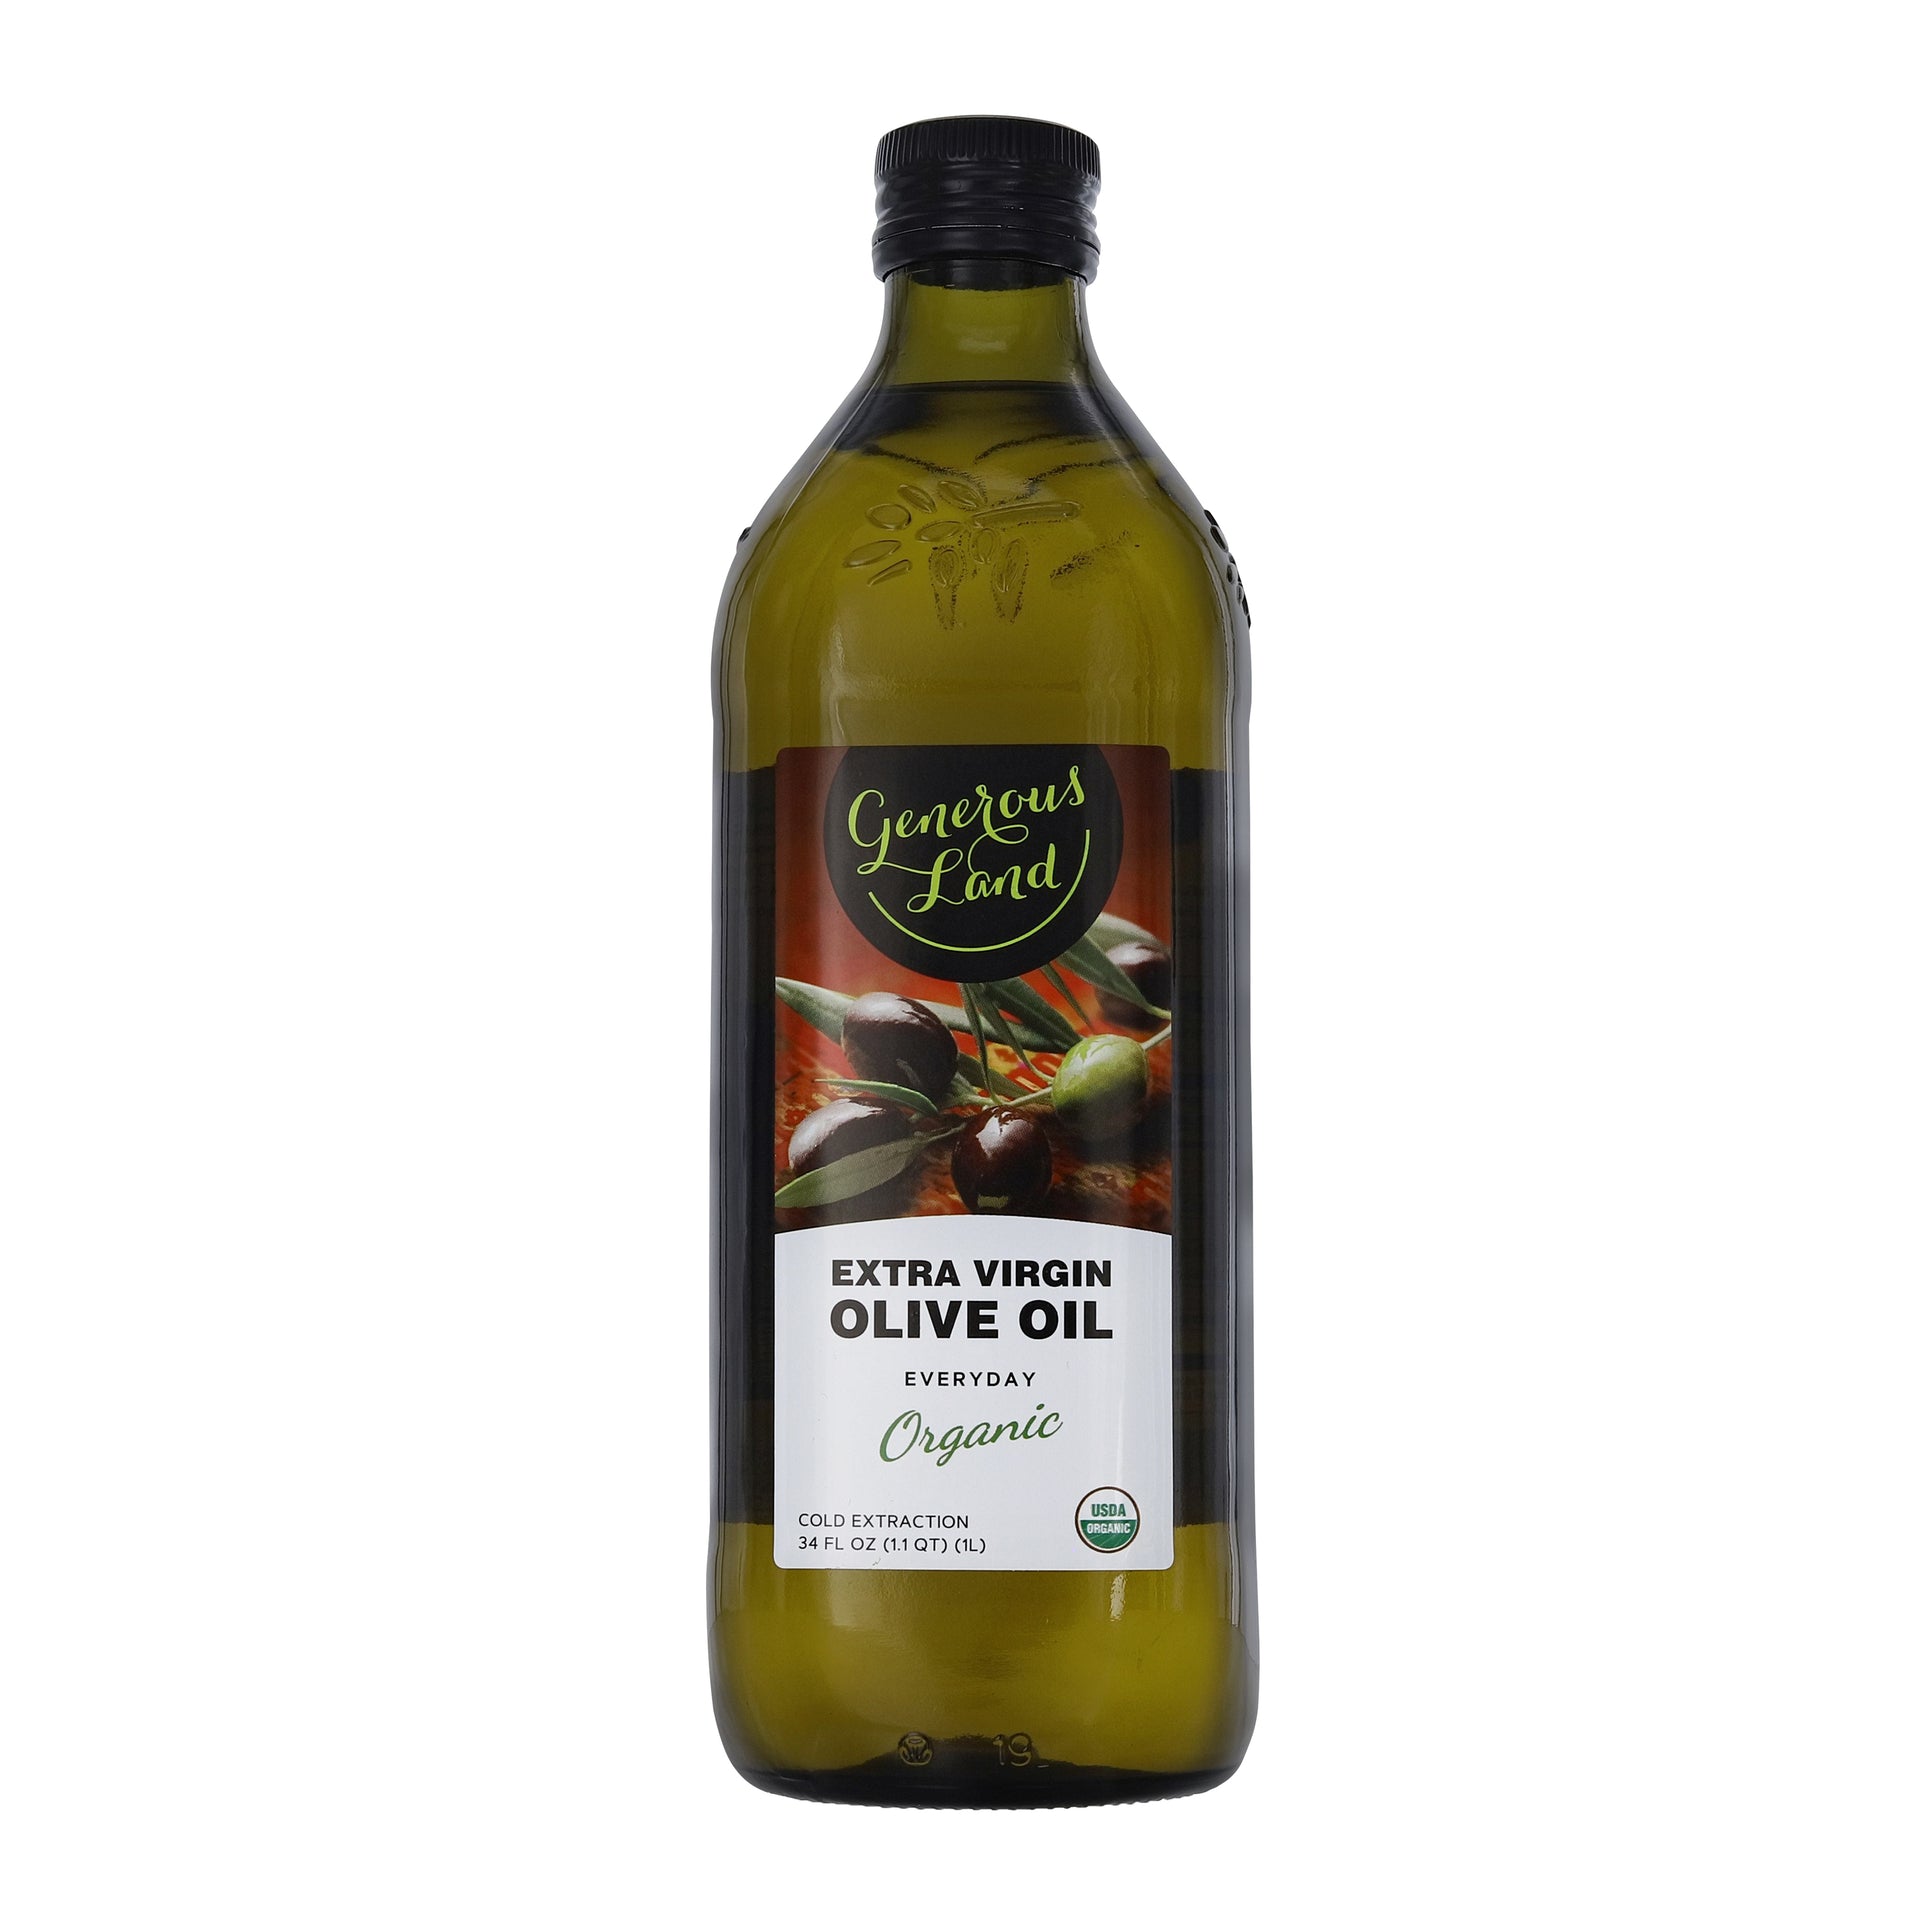 Olive Oil in Bulk Wholesale Prices, Tunisia